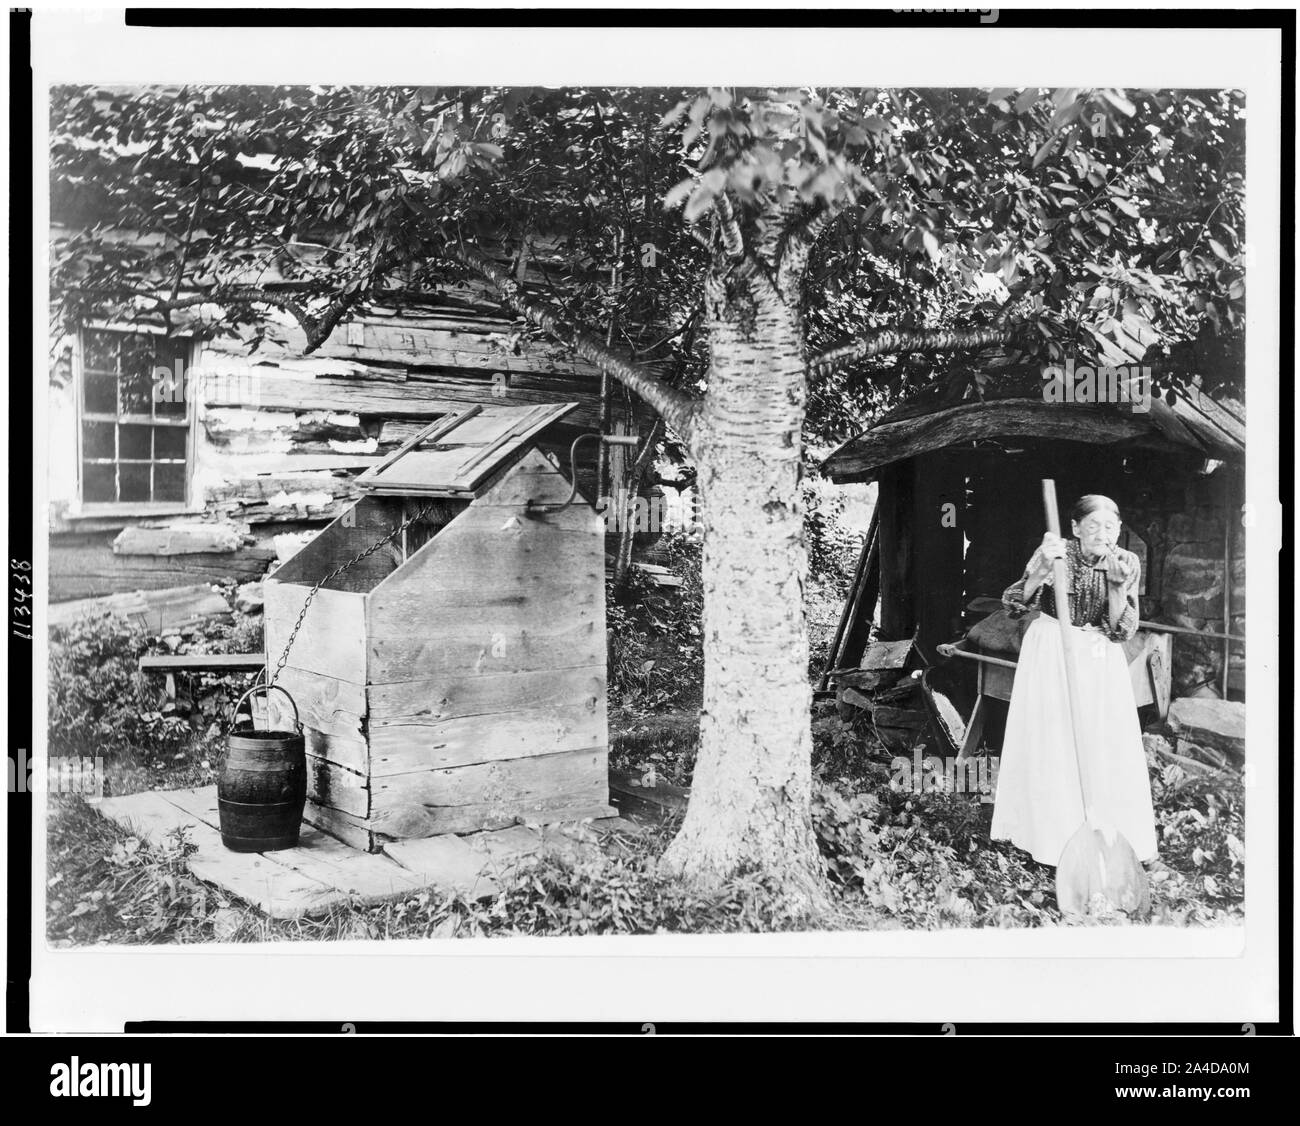 Winslow fegley Black and White Stock Photos & Images - Alamy